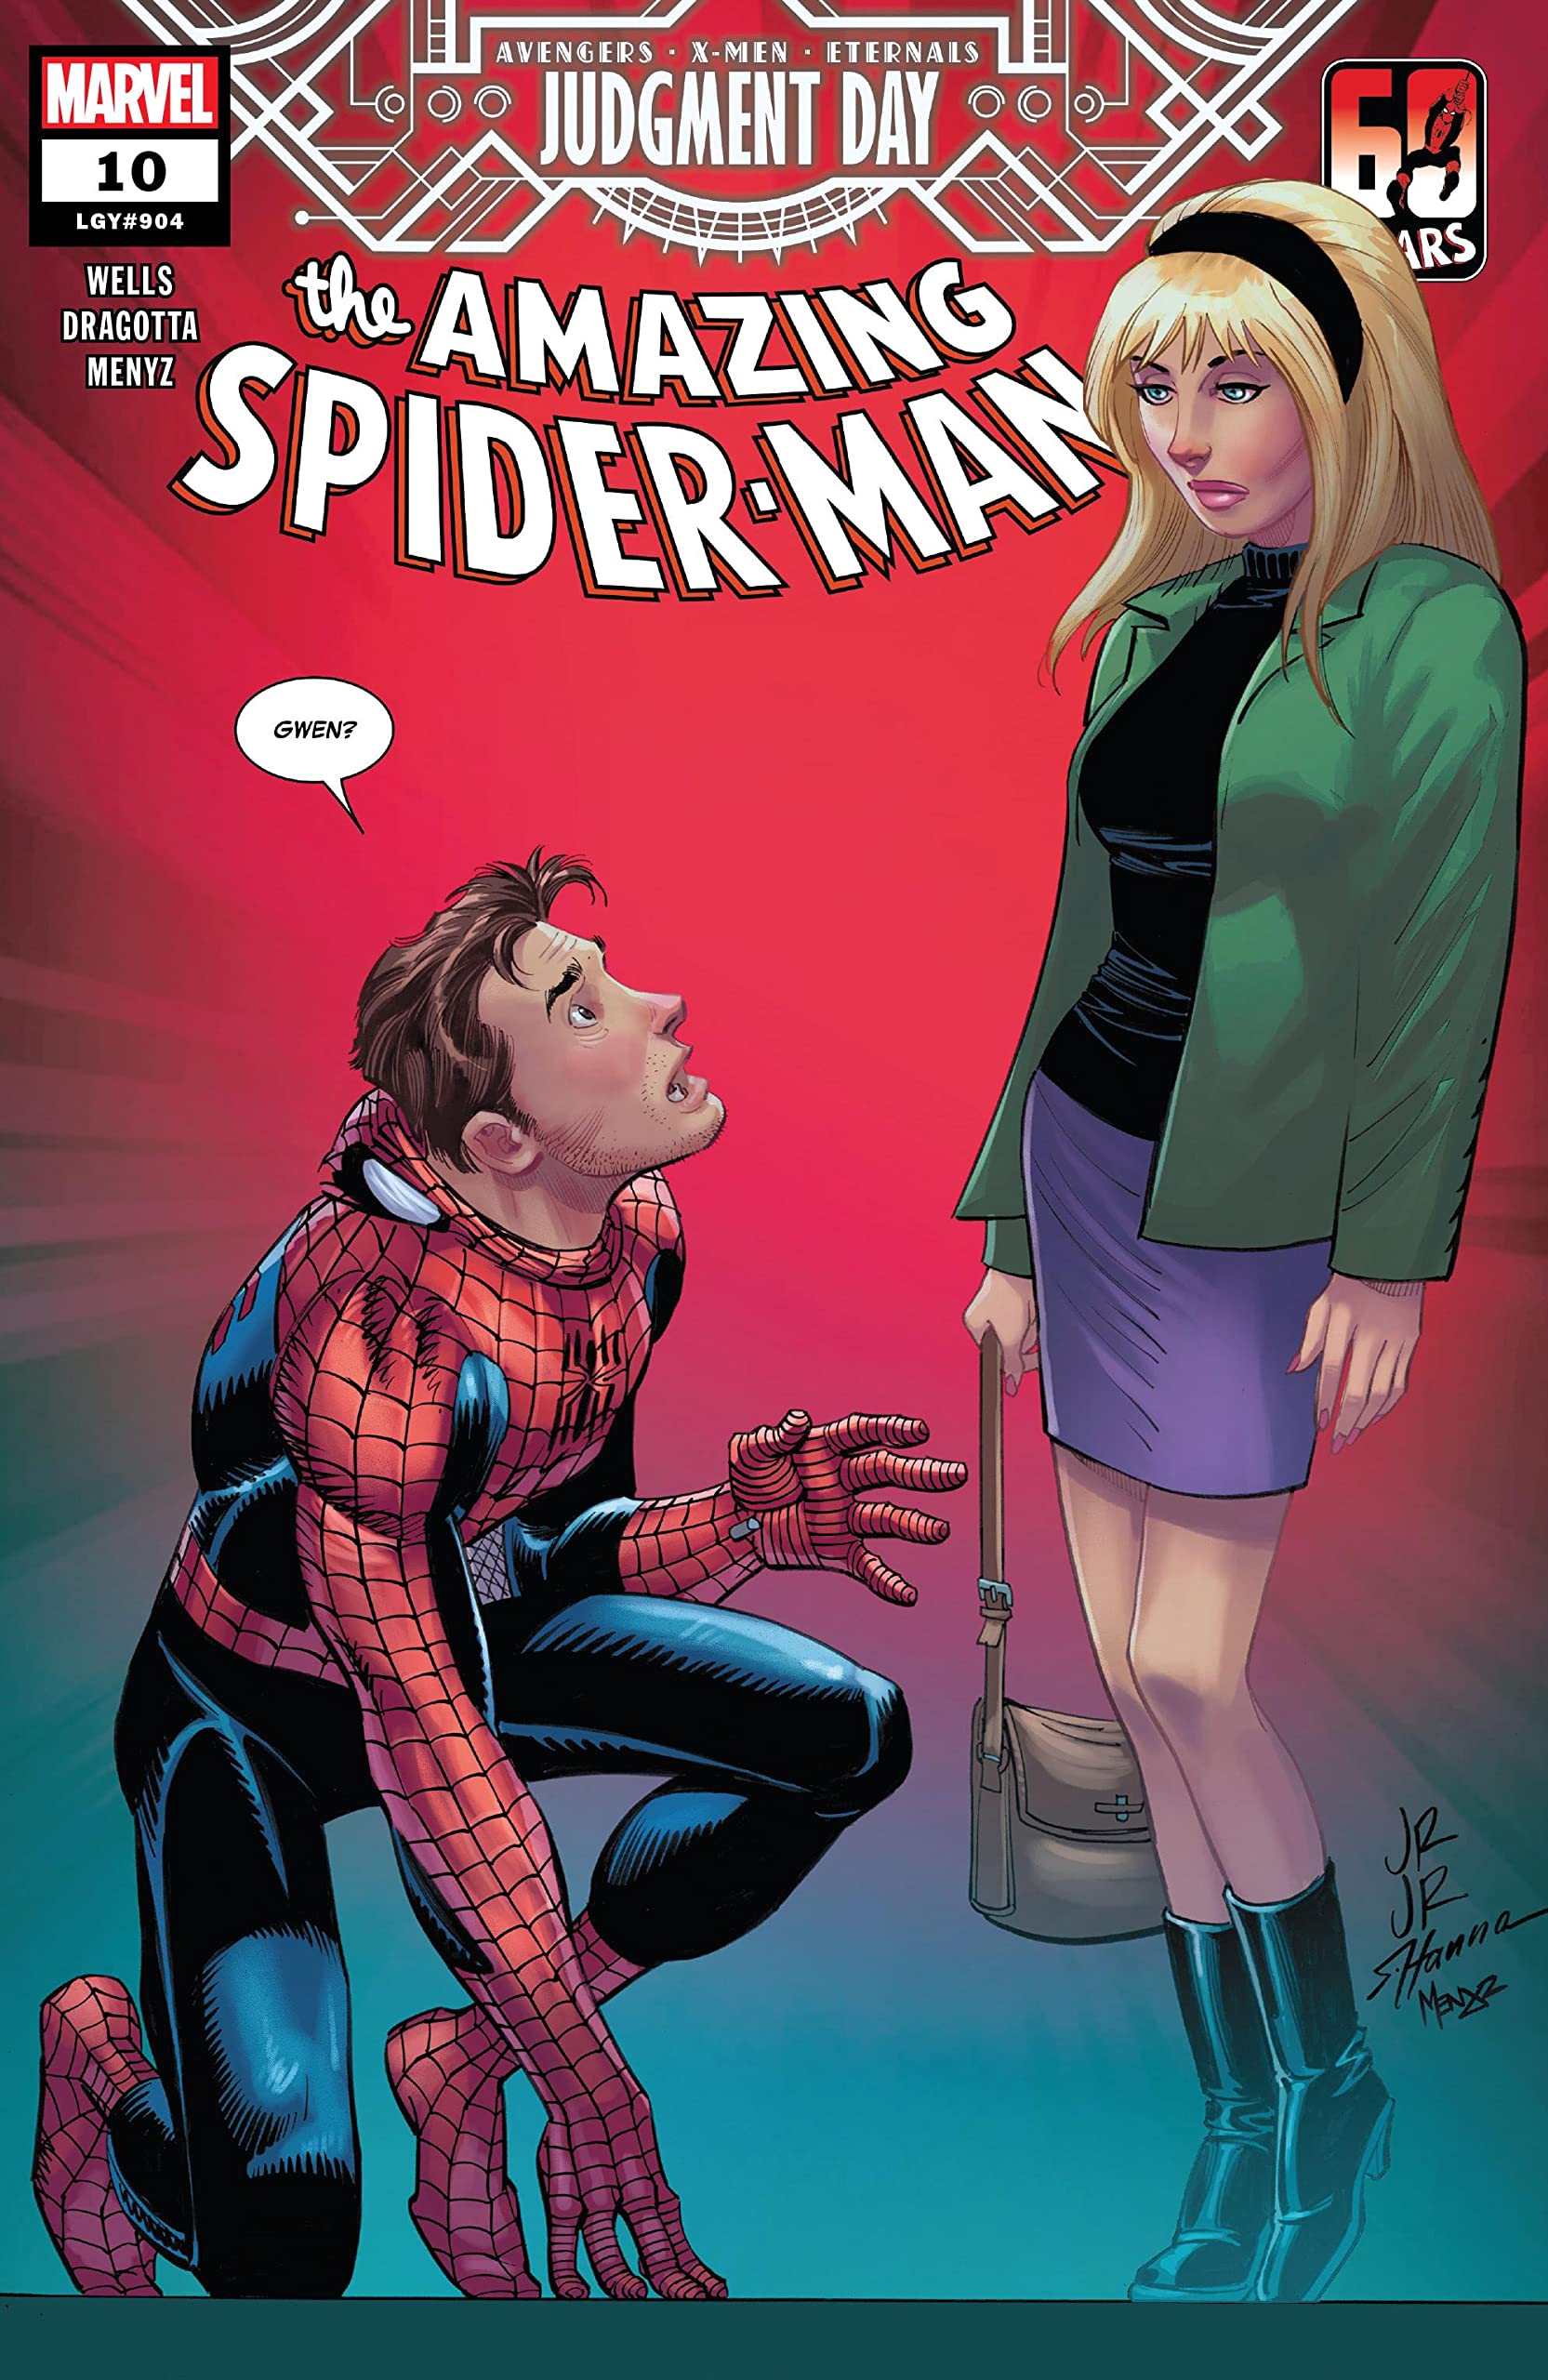 AMAZING SPIDER-MAN (2018 Series) (MARVEL) #39 Fine Comics Book